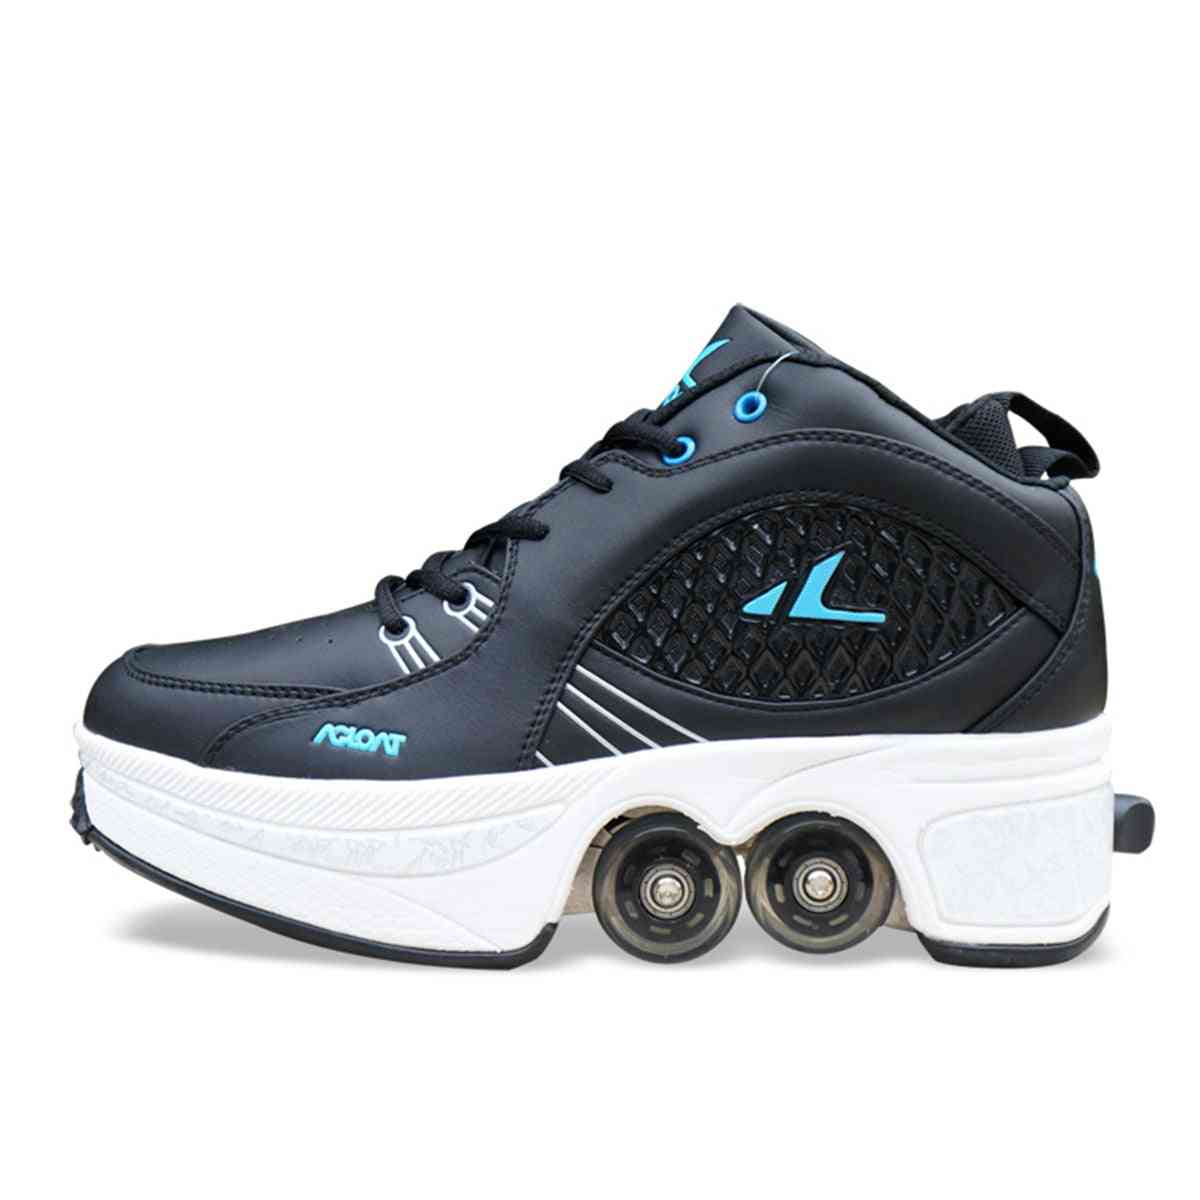 Casual Sneakers Walk Roller Deform Runaway Four Wheeled Skates